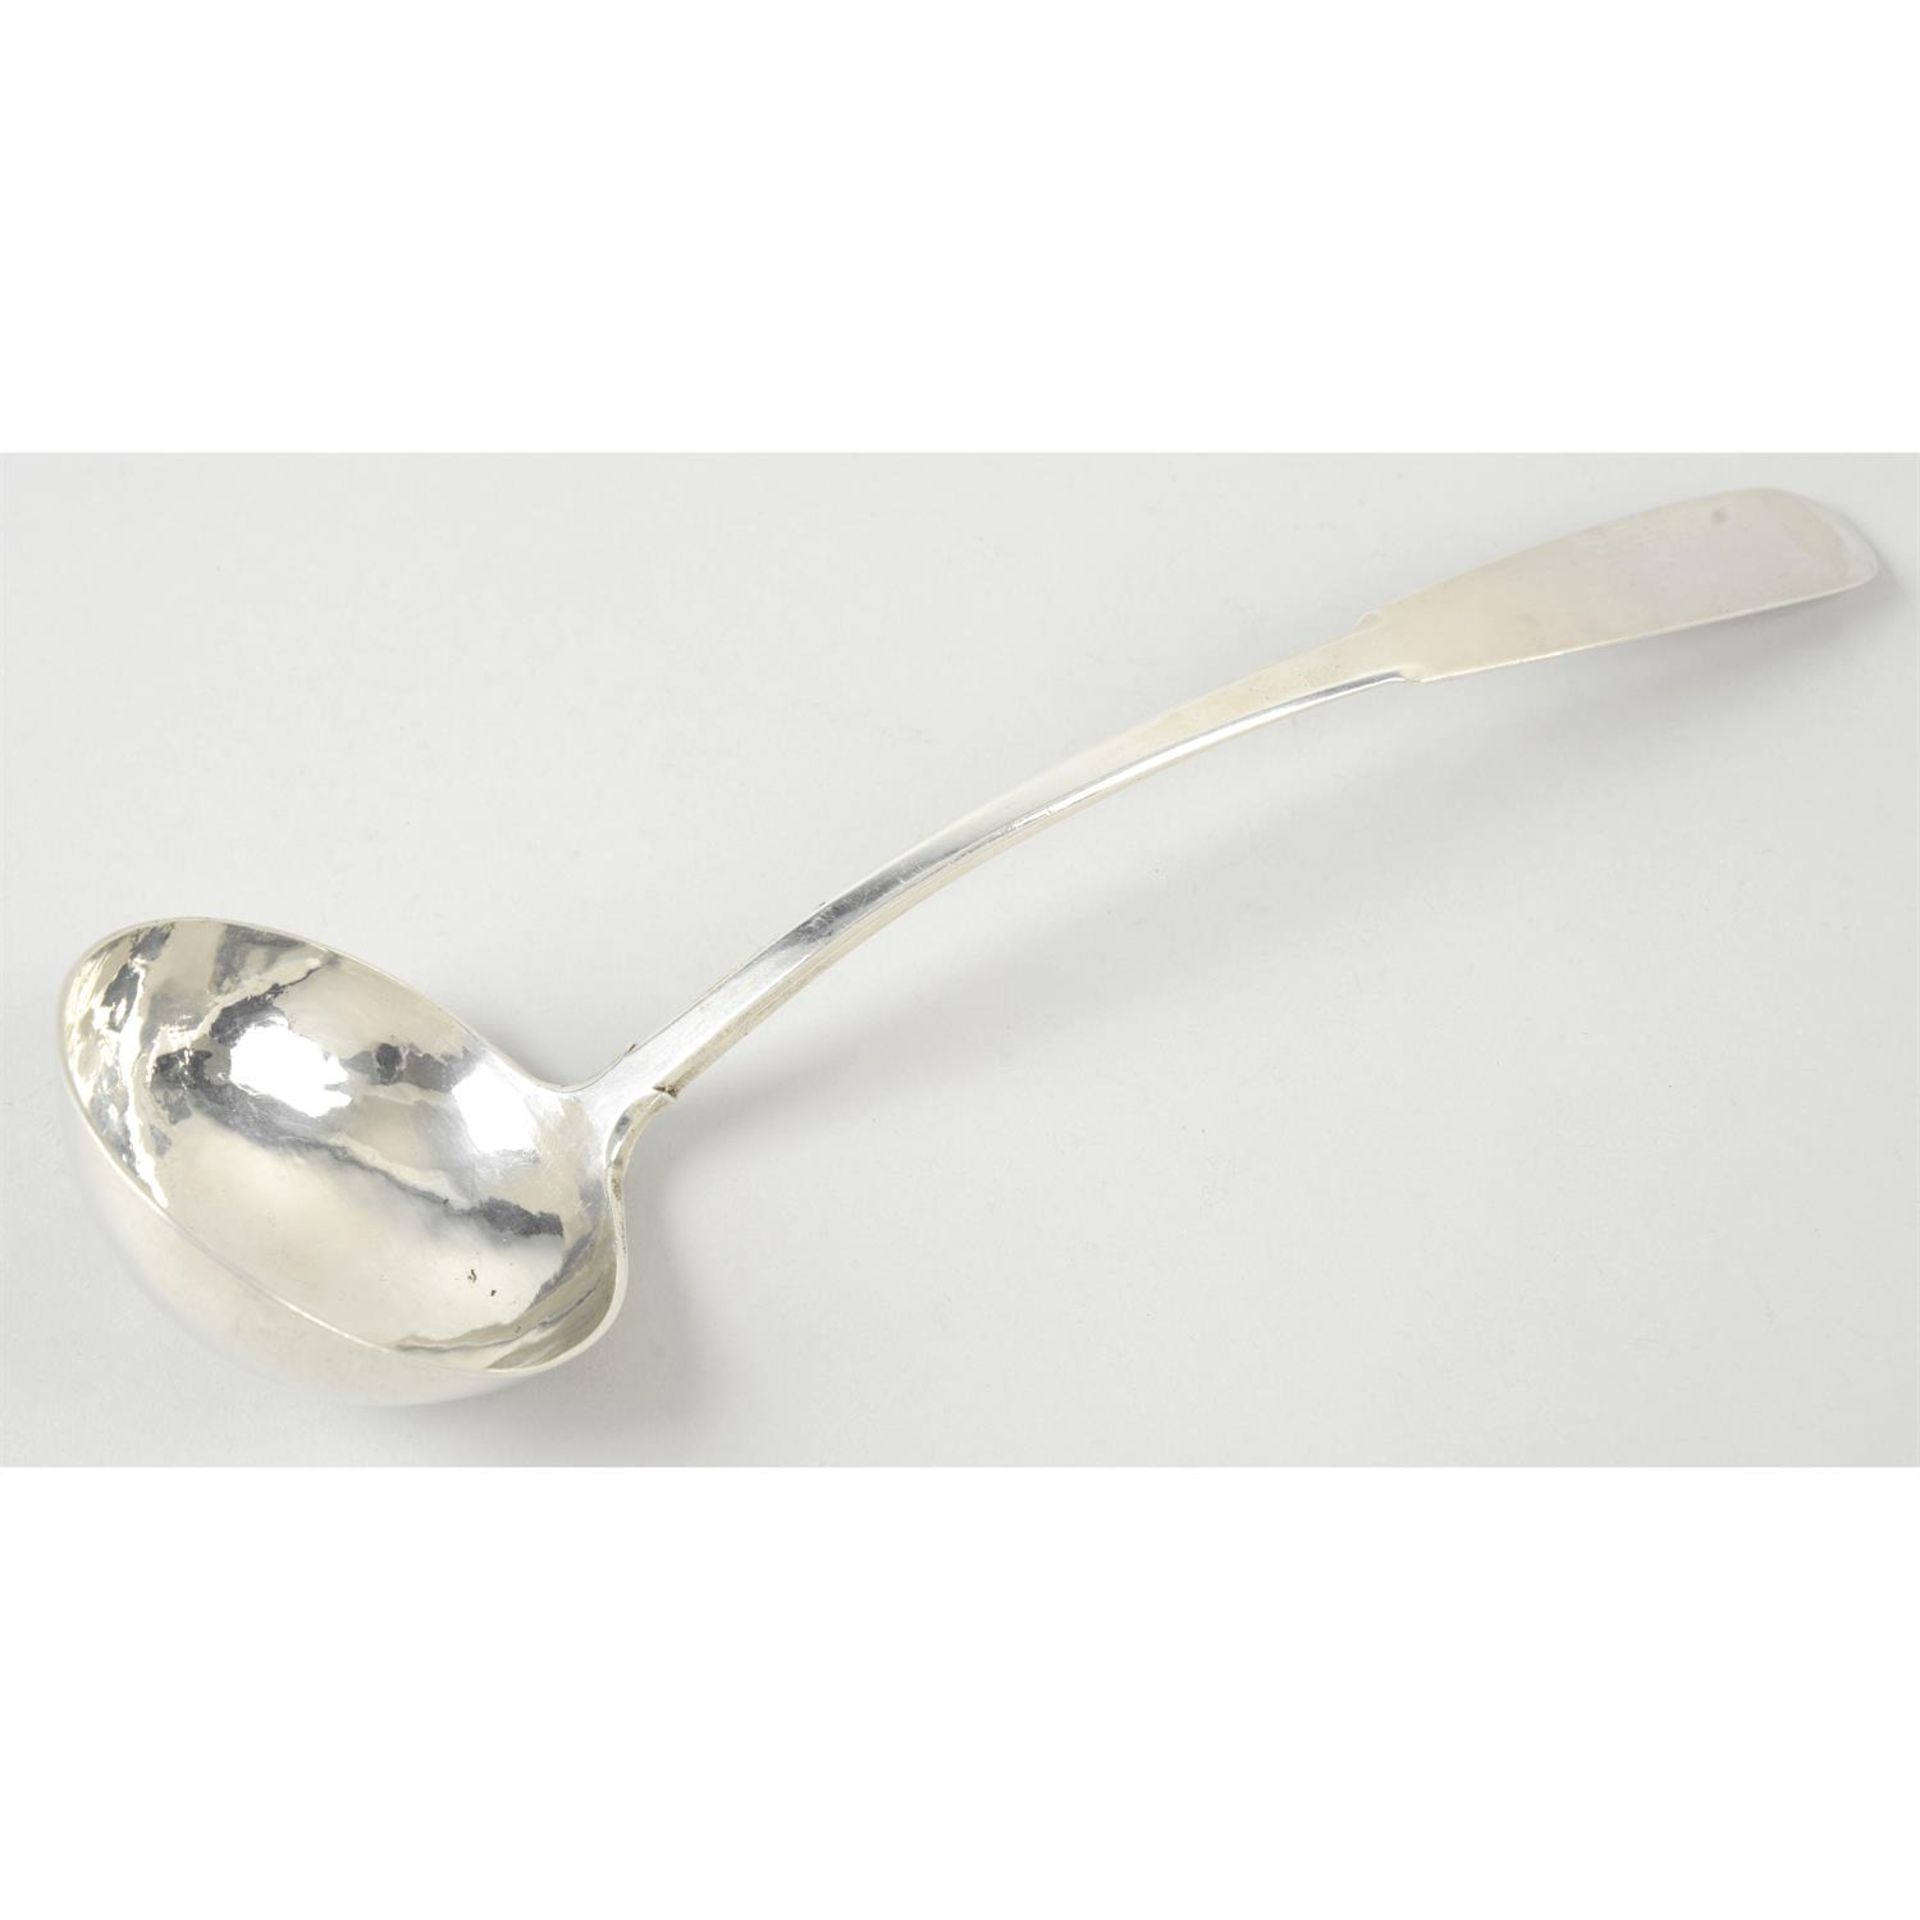 A silver soup ladle, probably Scottish provincial.